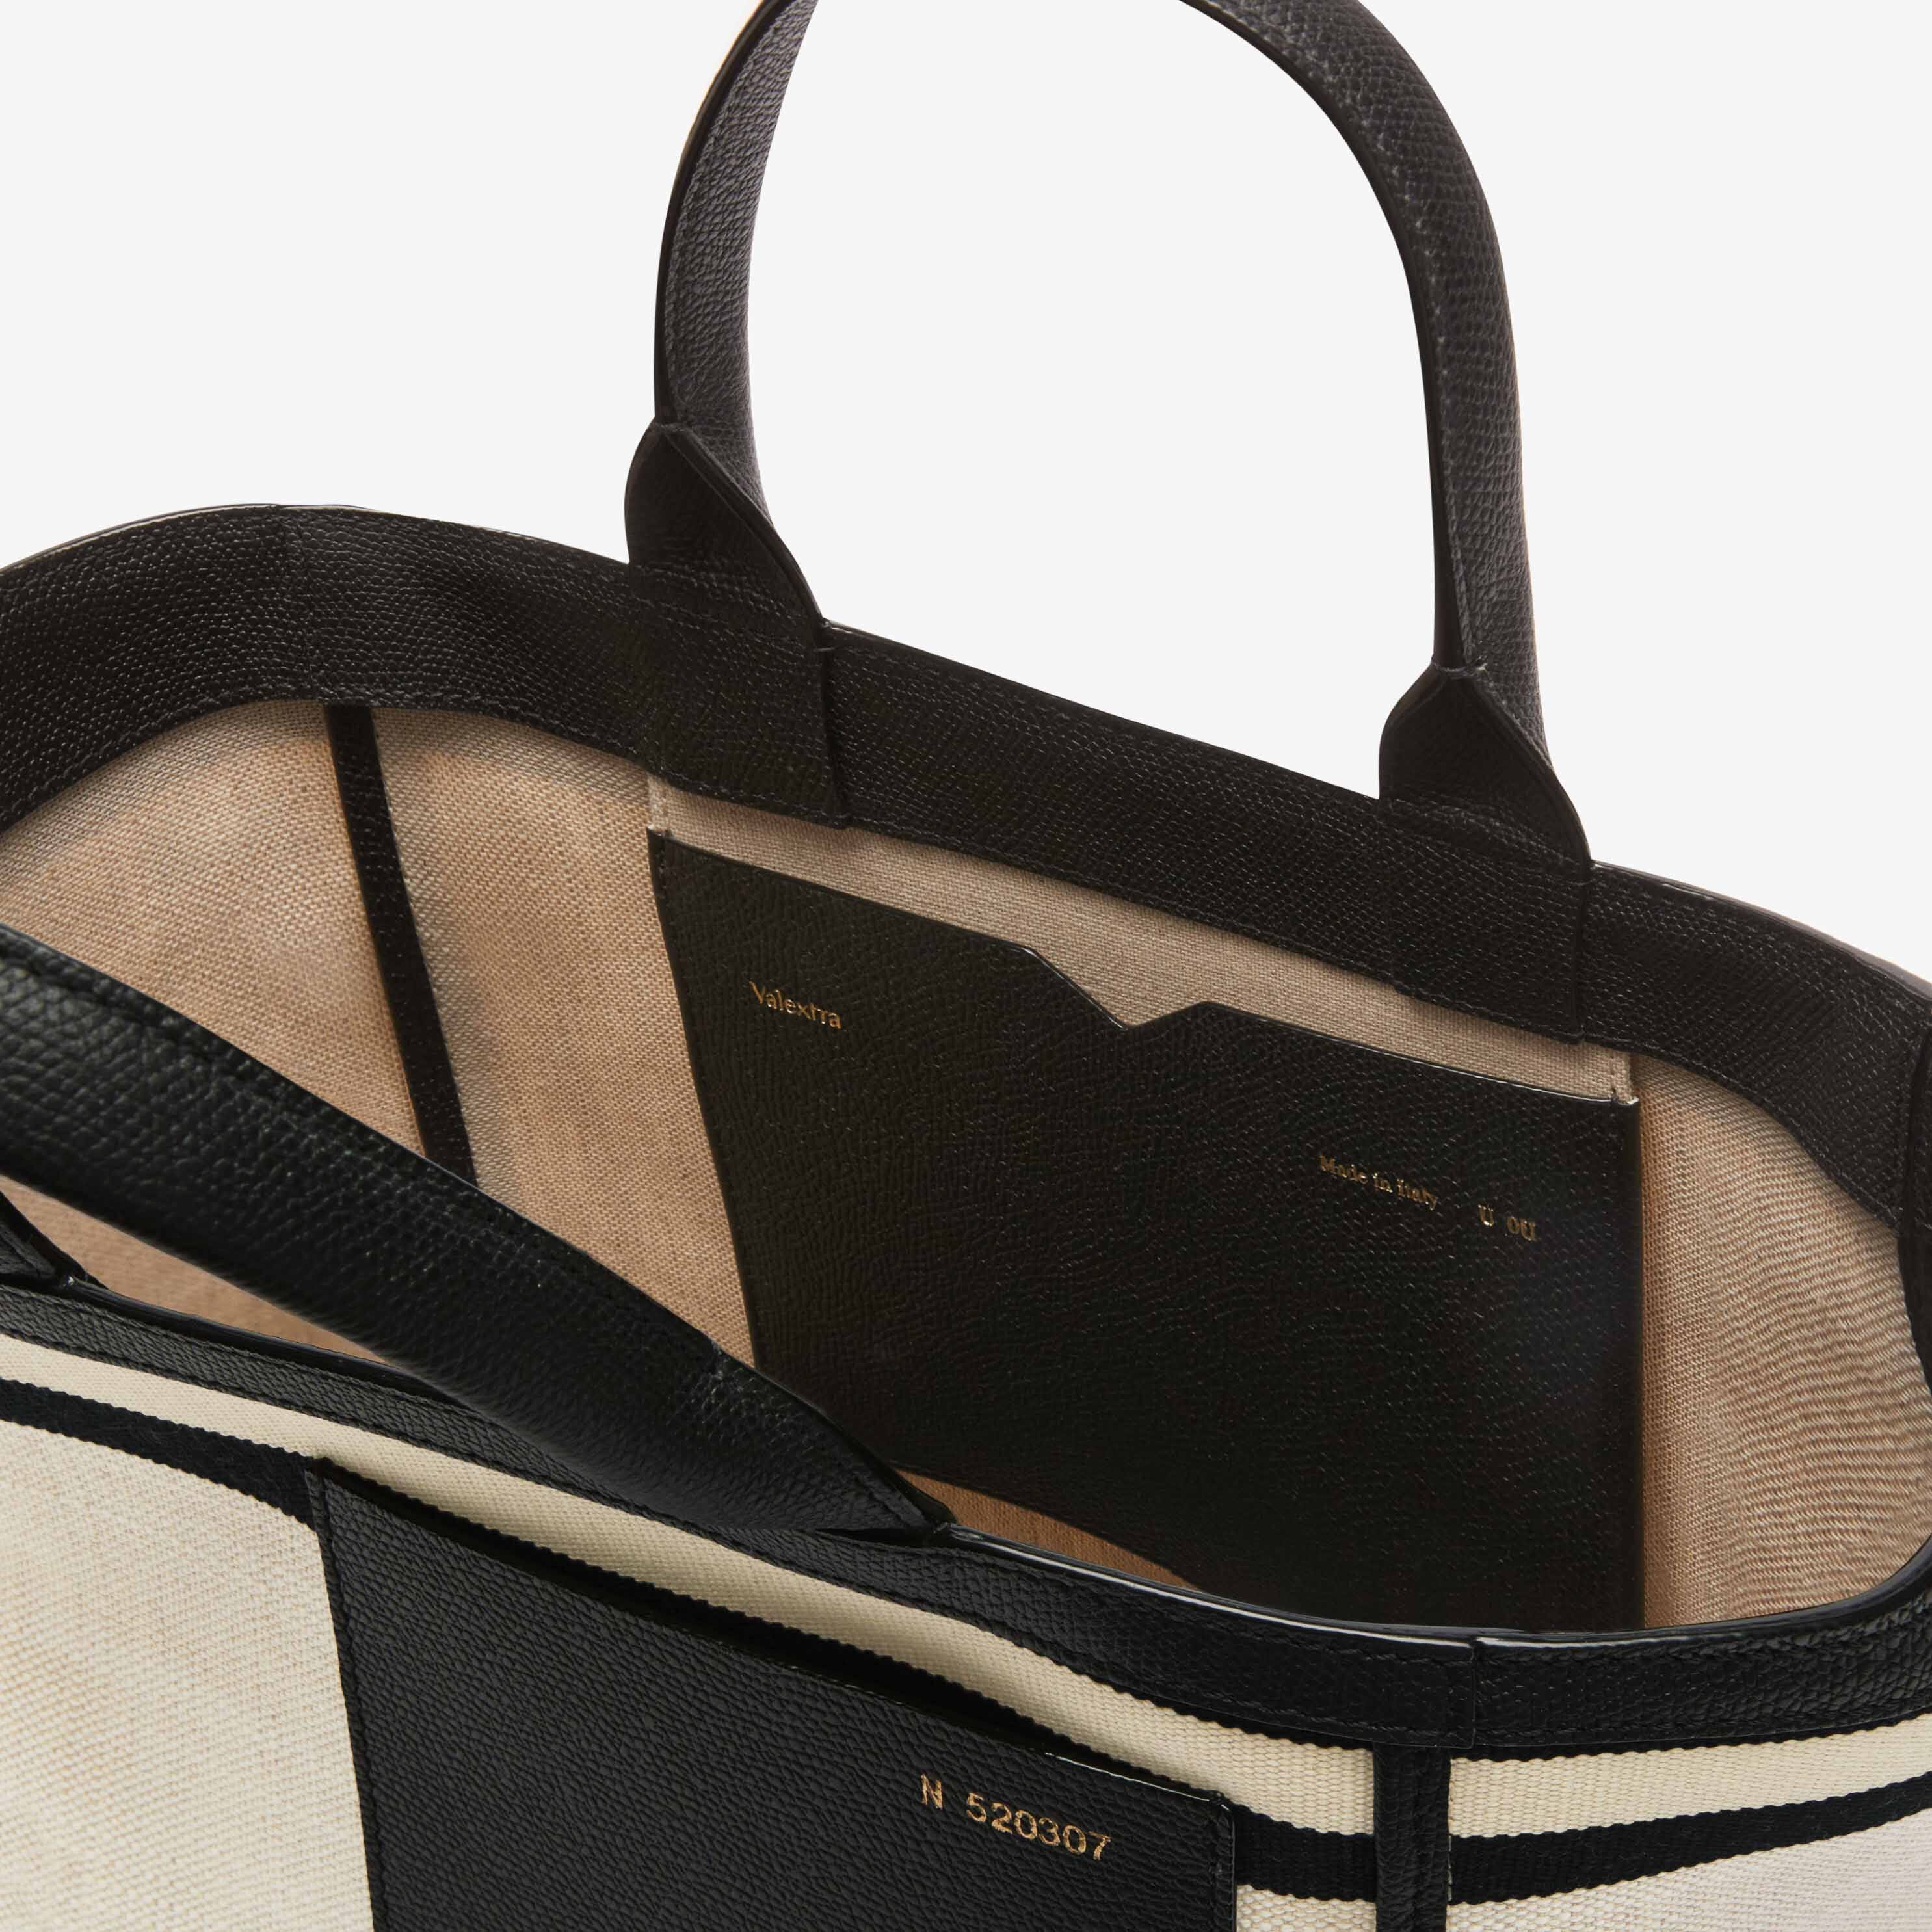 Linear Fabric Mini Tote Bag - Sand Brown/Black - Tessuto Linear/VS - Valextra - 2